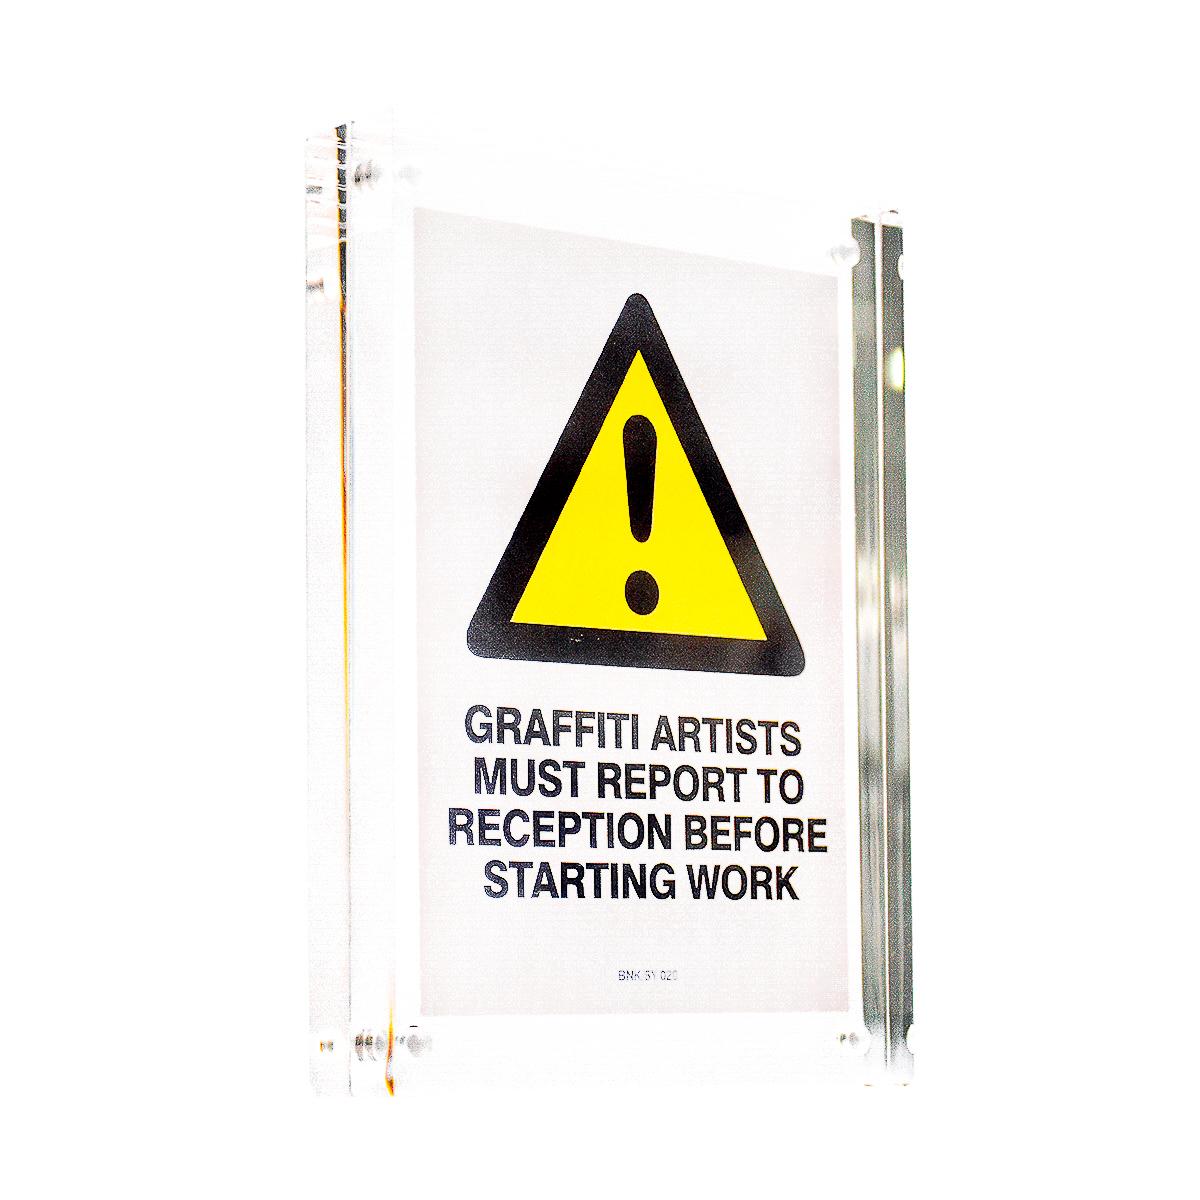 BANKSY GRAFFITI ARTISTS MUST REPORT TO RECEPTION BNK/5Y 020 STICKER (Framed) - Art by Banksy